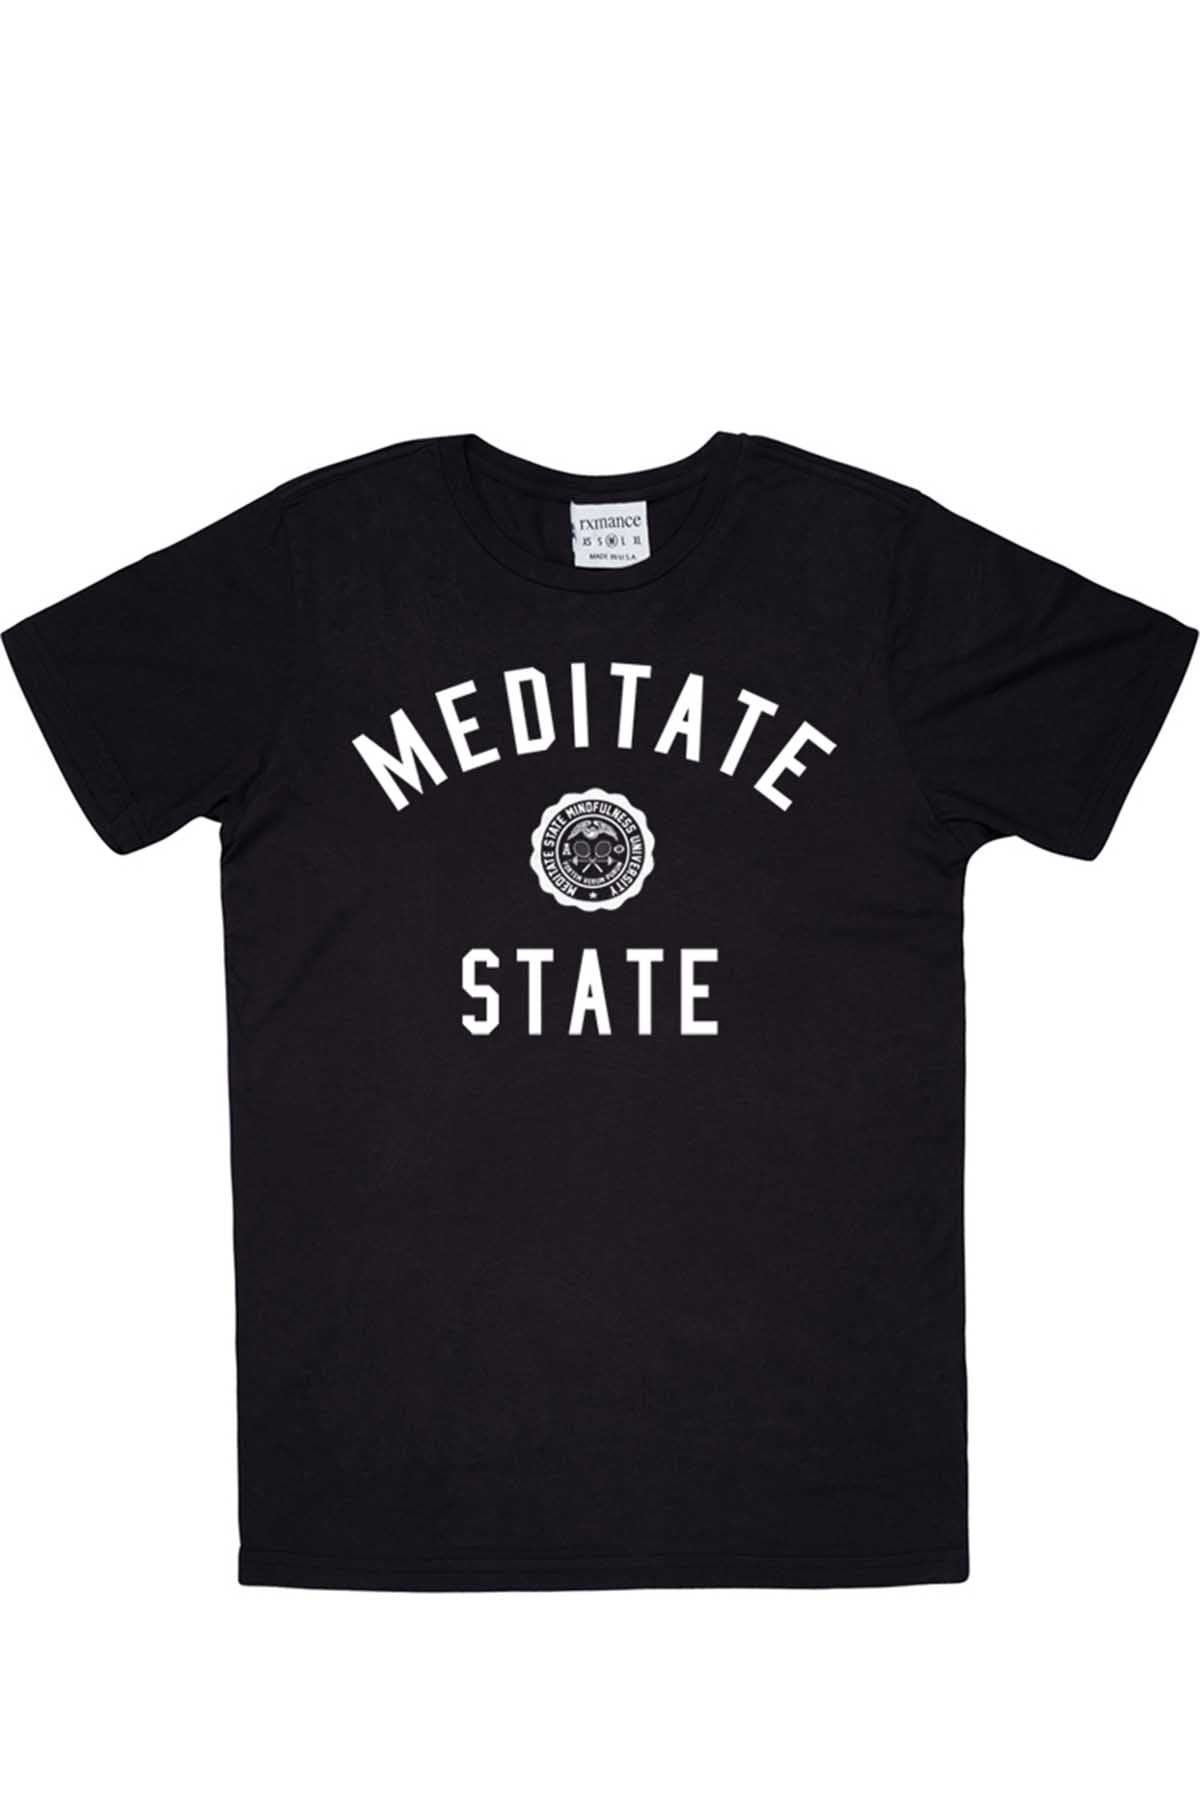 Rxmance Black Meditate State Crew Tee